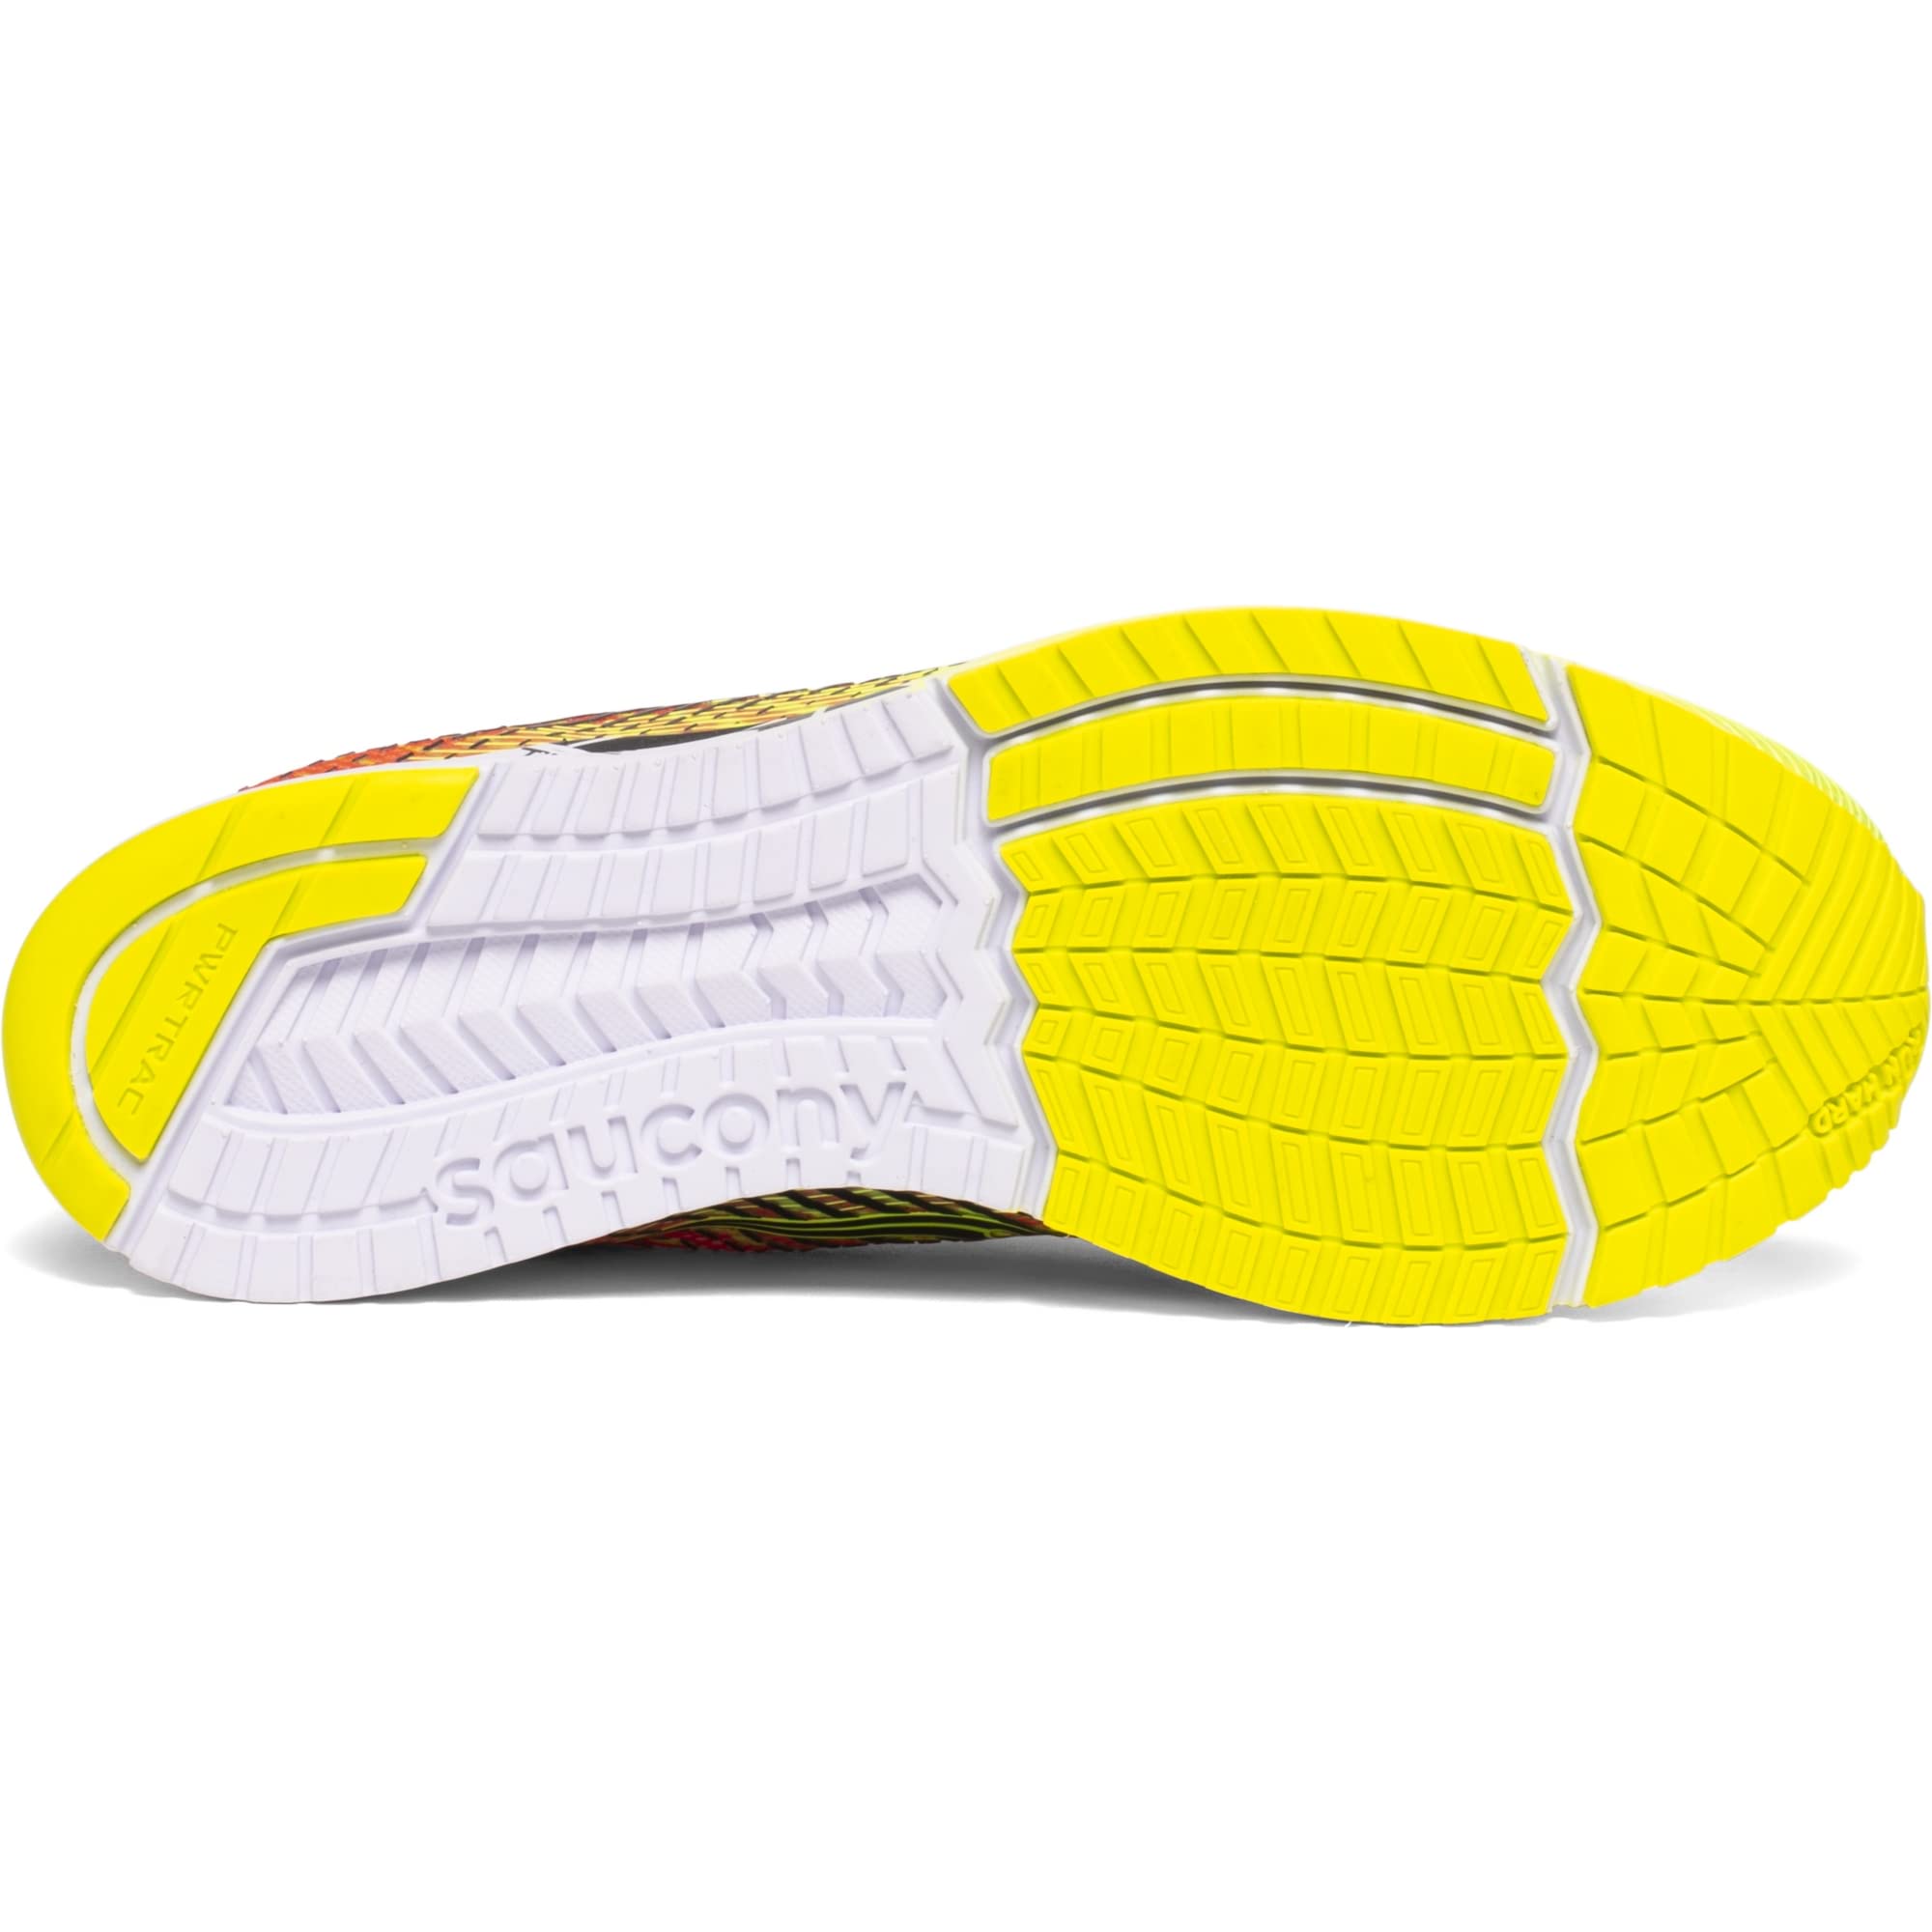 Saucony Women's Type A9 Road Running Shoe, Citron | Pink, 6